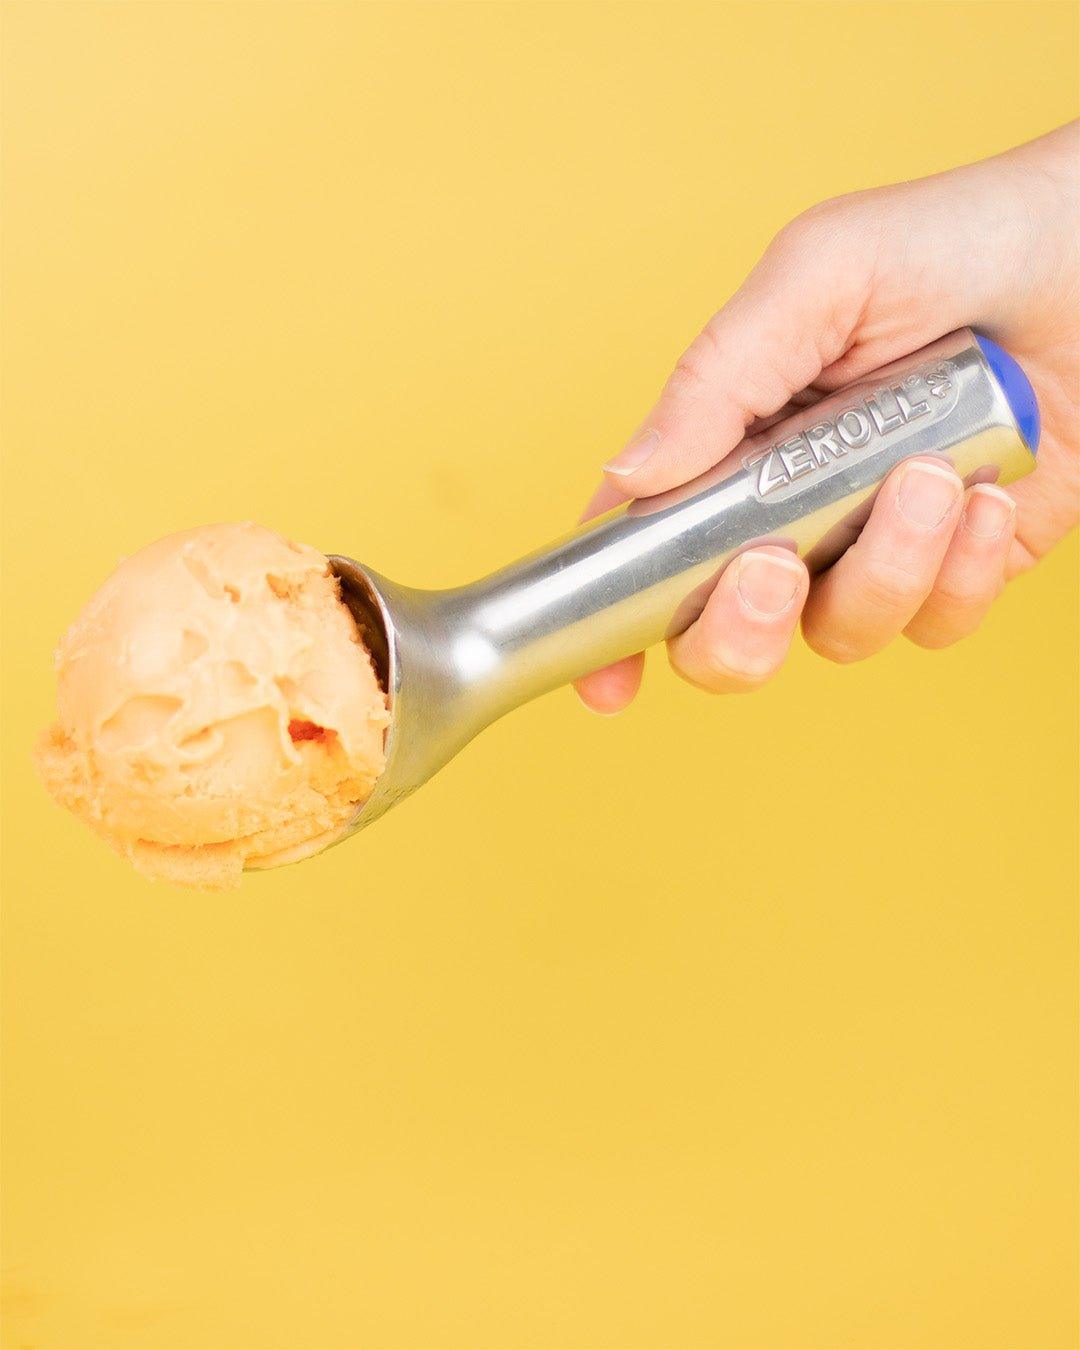 ZeRoll Ice Cream Scooper Model 1012 (3 oz) (Pack of 3)